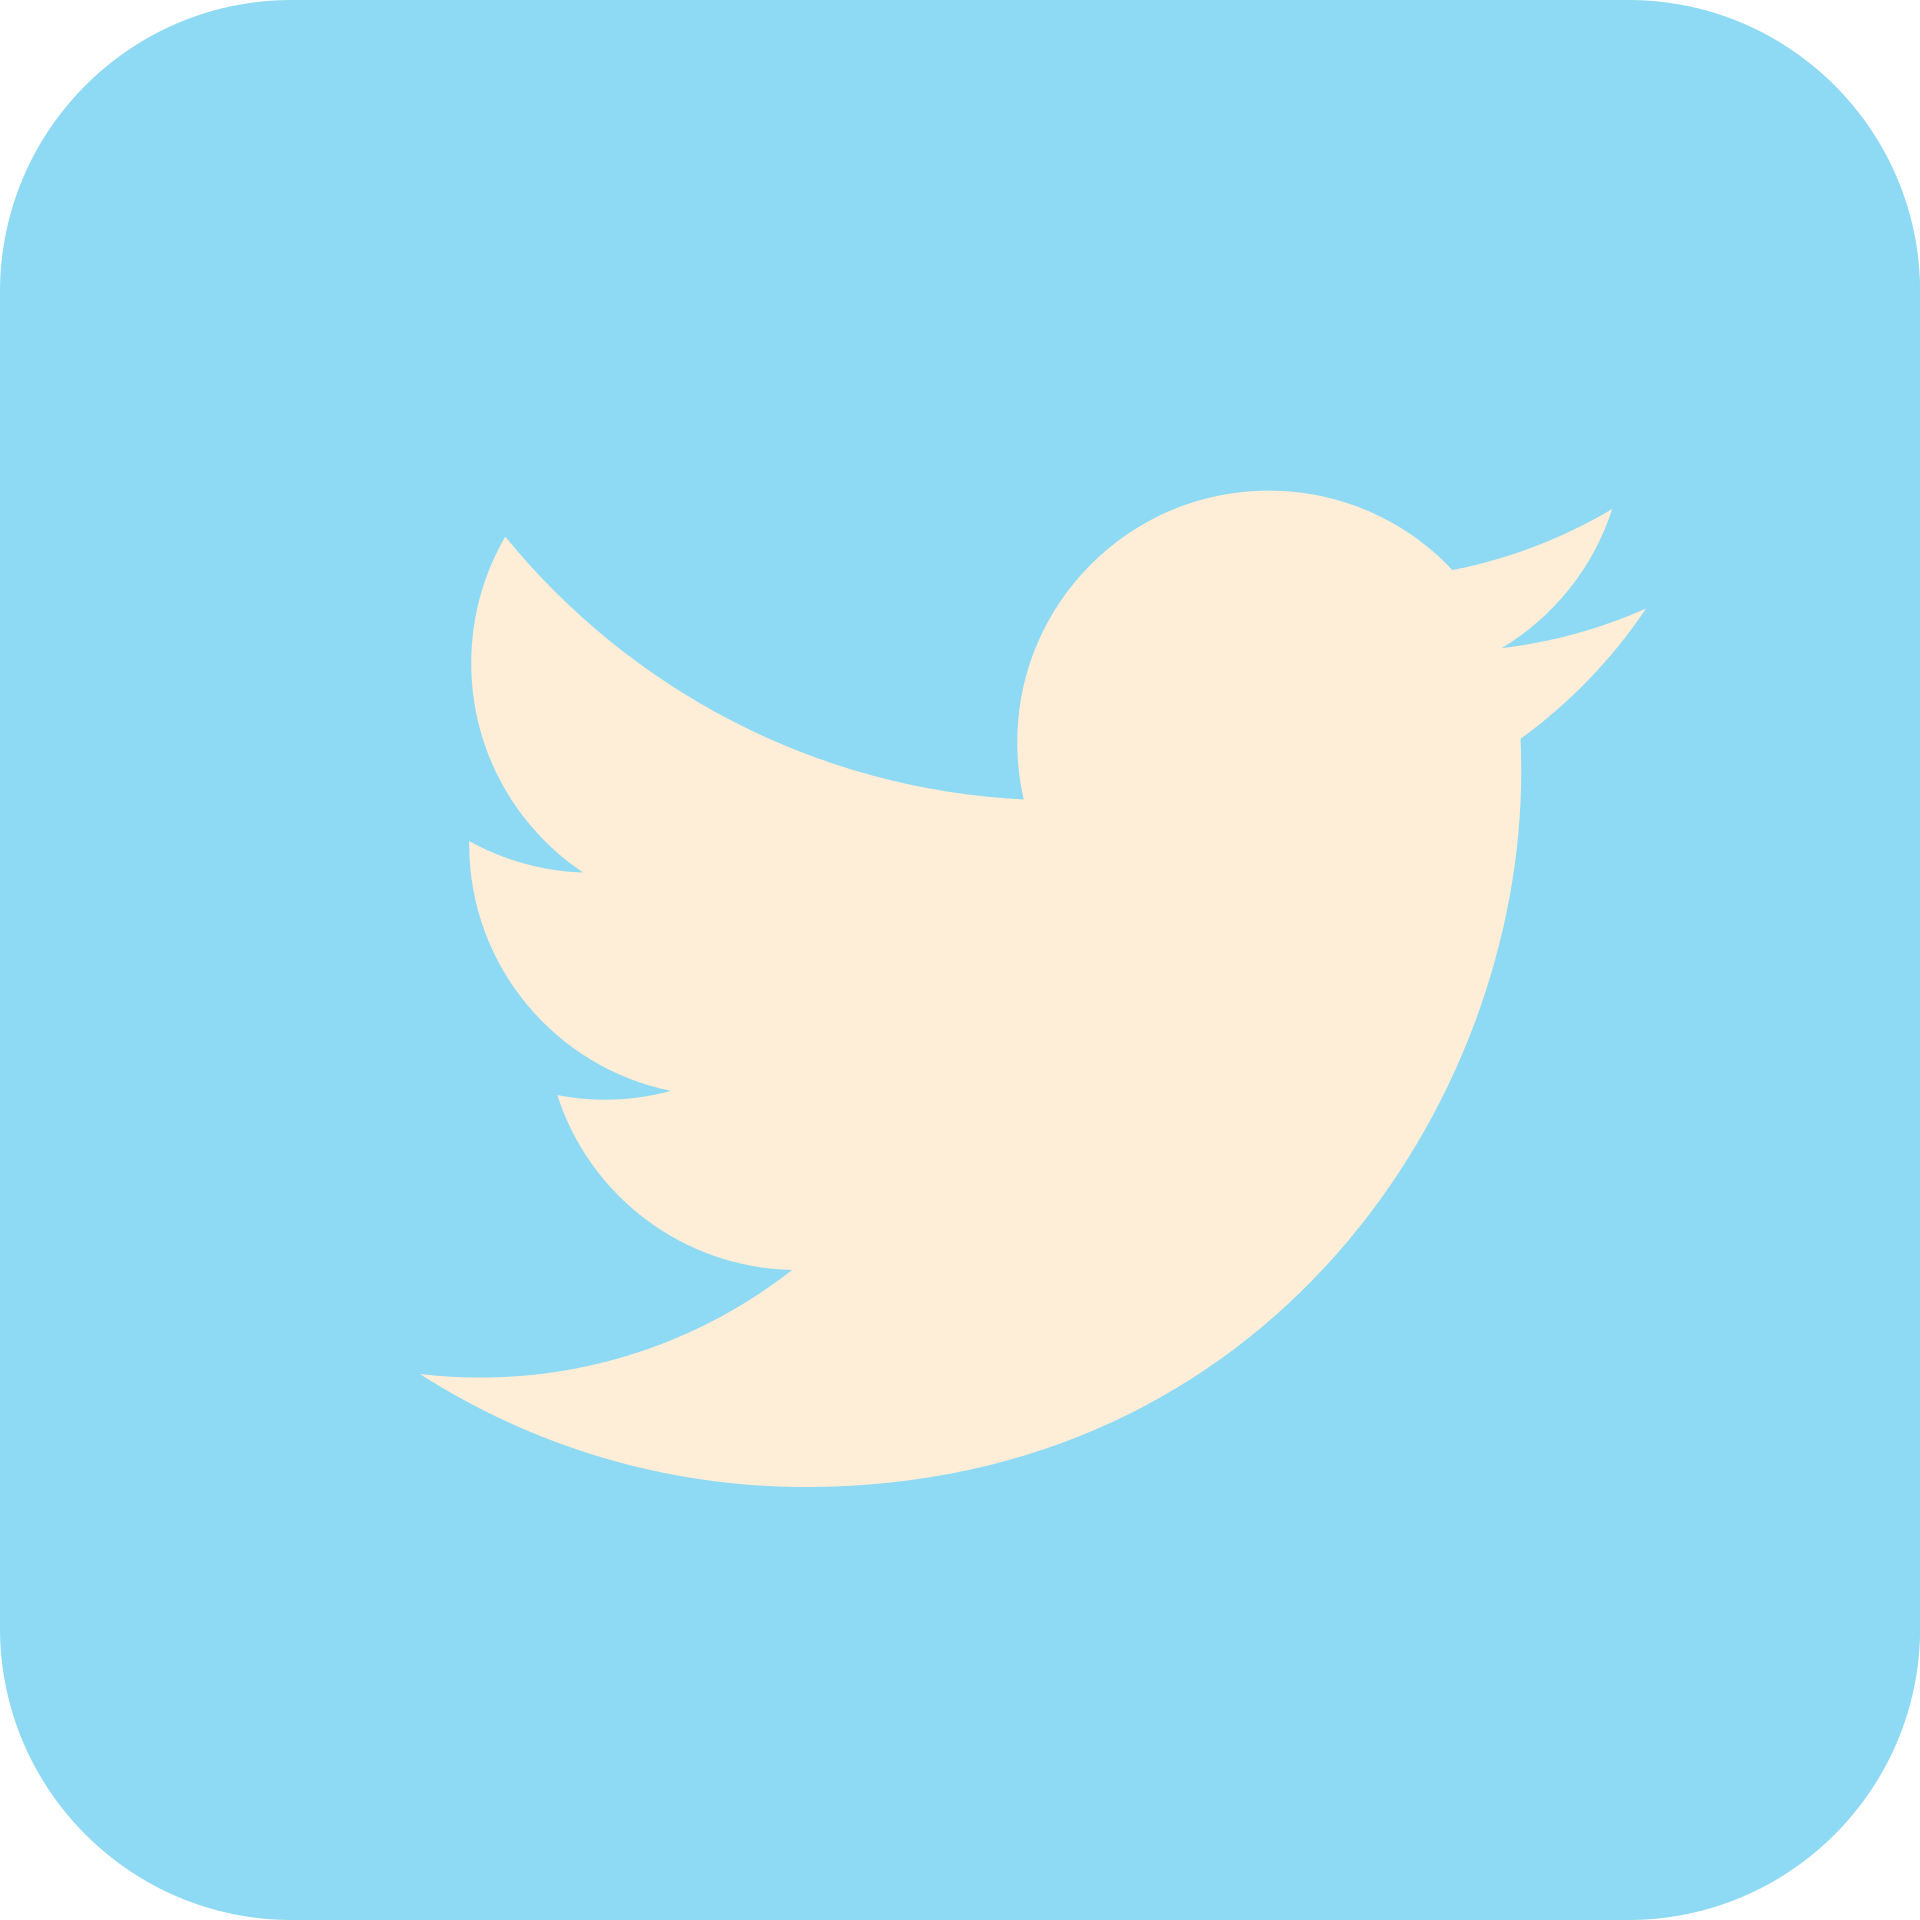 Logo de la plateforme Twitter
pixabay.com